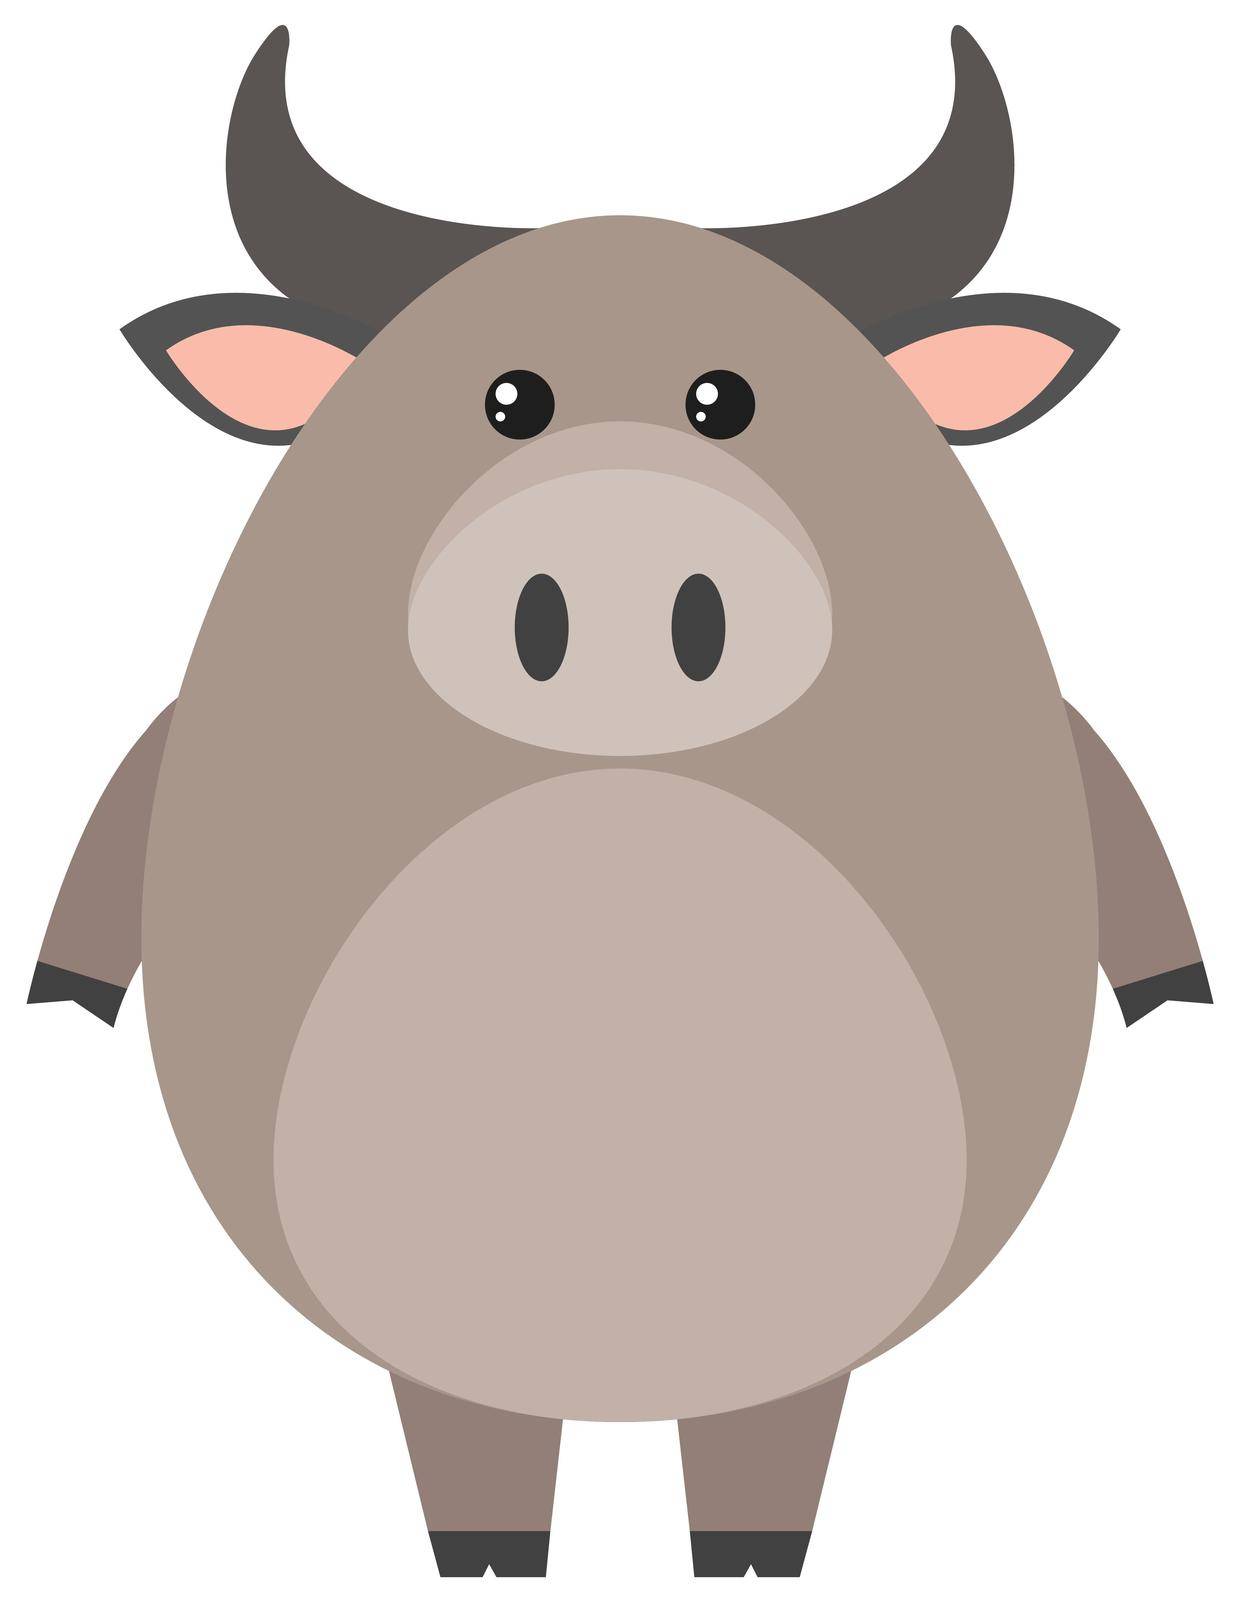 Buffalo with round body illustration